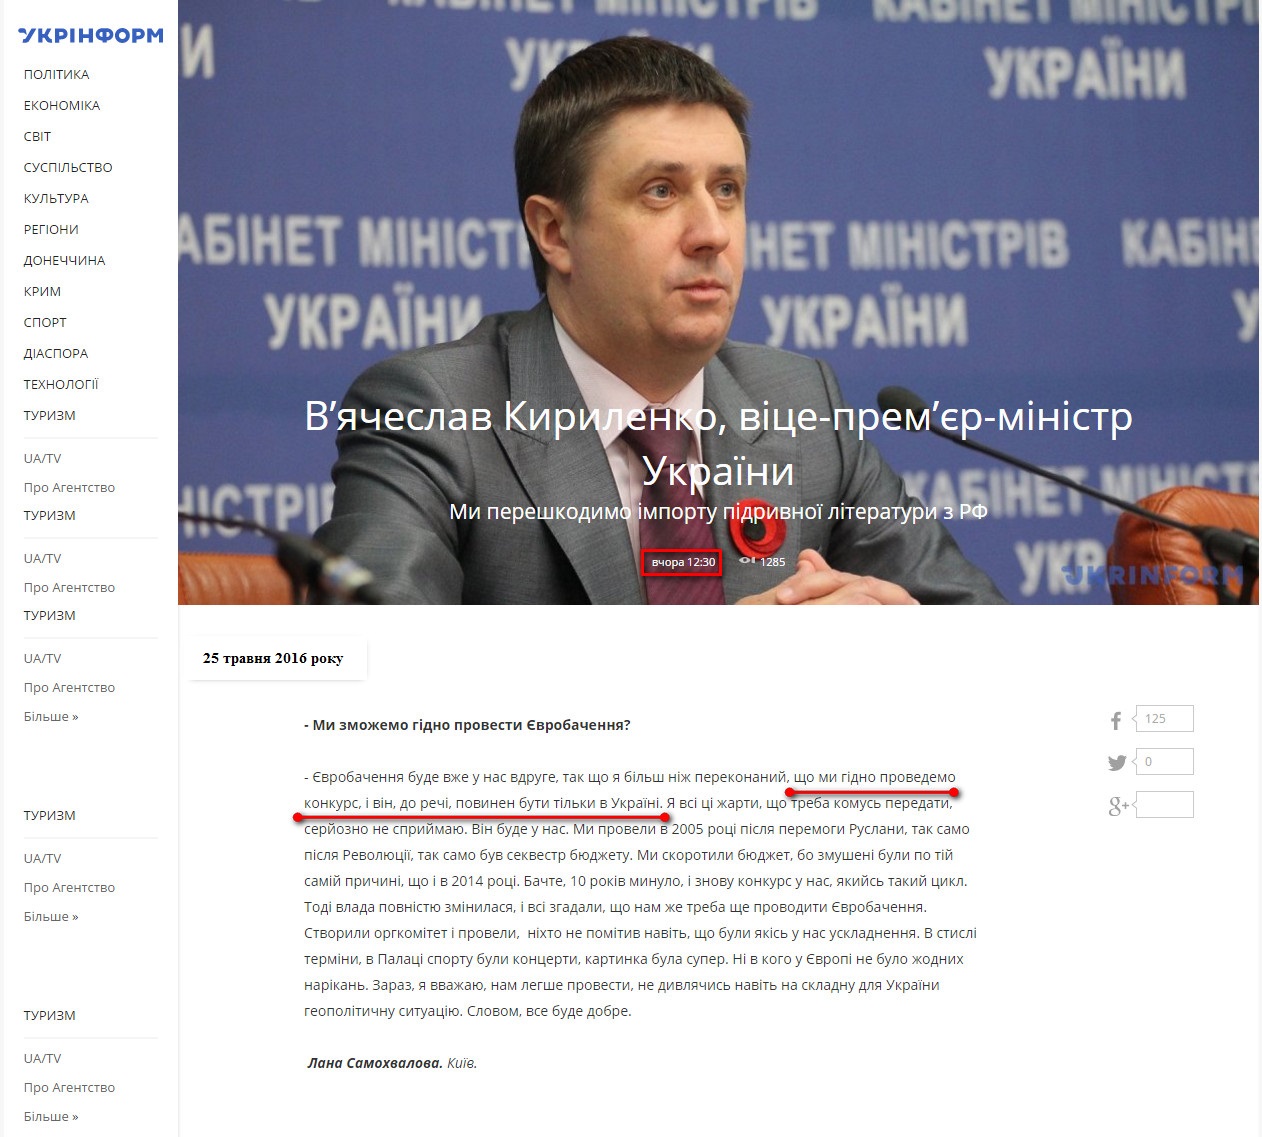 http://www.ukrinform.ua/rubric-culture/2022784-vaceslav-kirilenko-vicepremerministr-ukraini.html